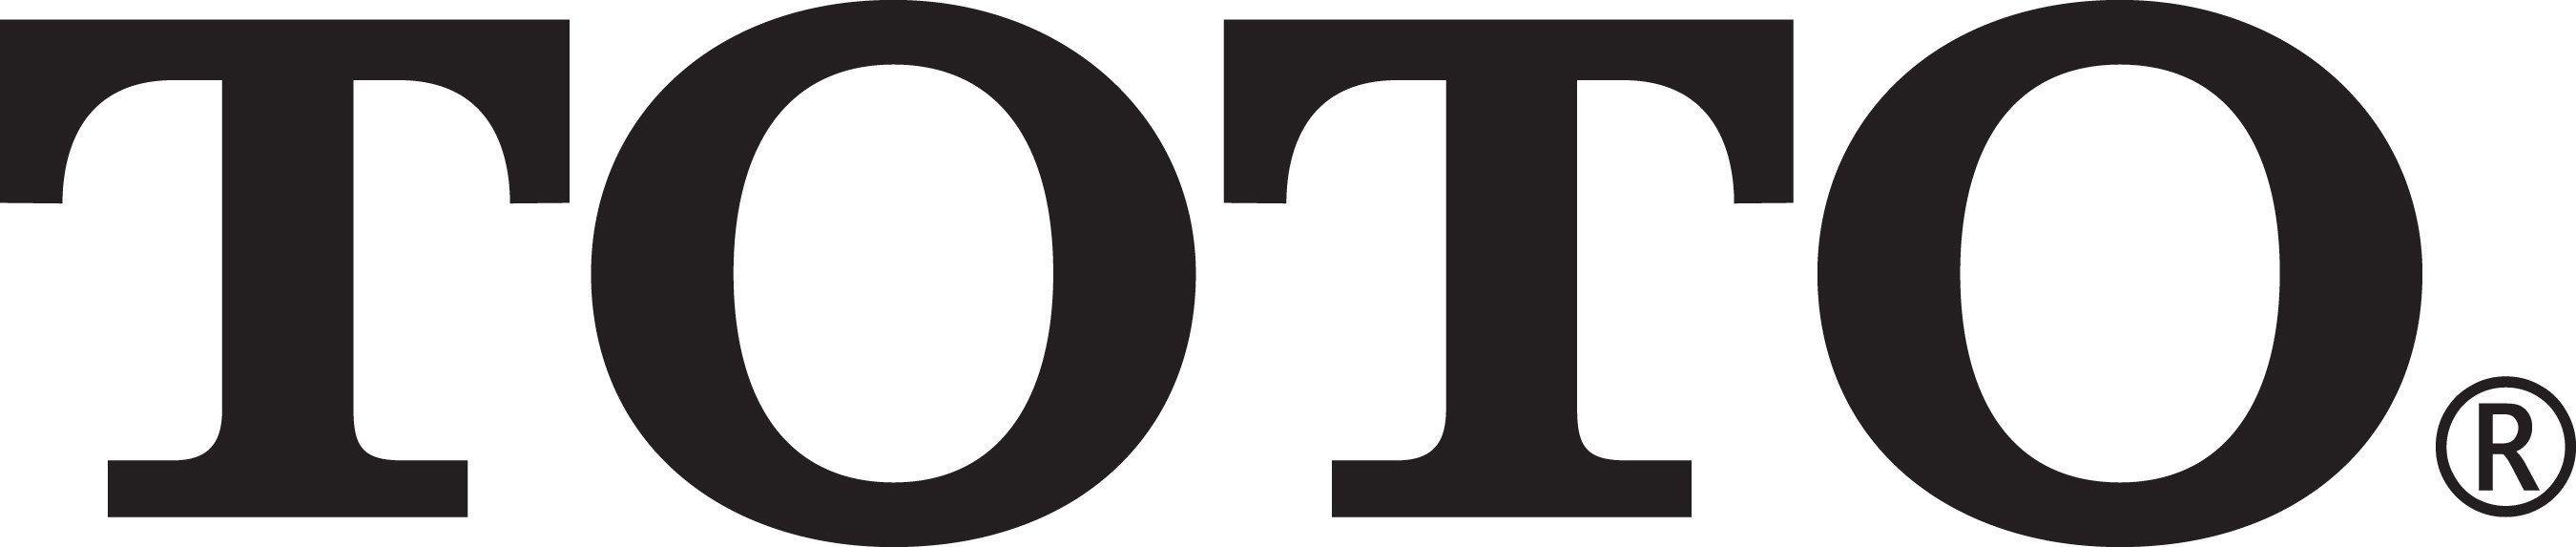 Toto Logo - TOTO THE REAL LOGO